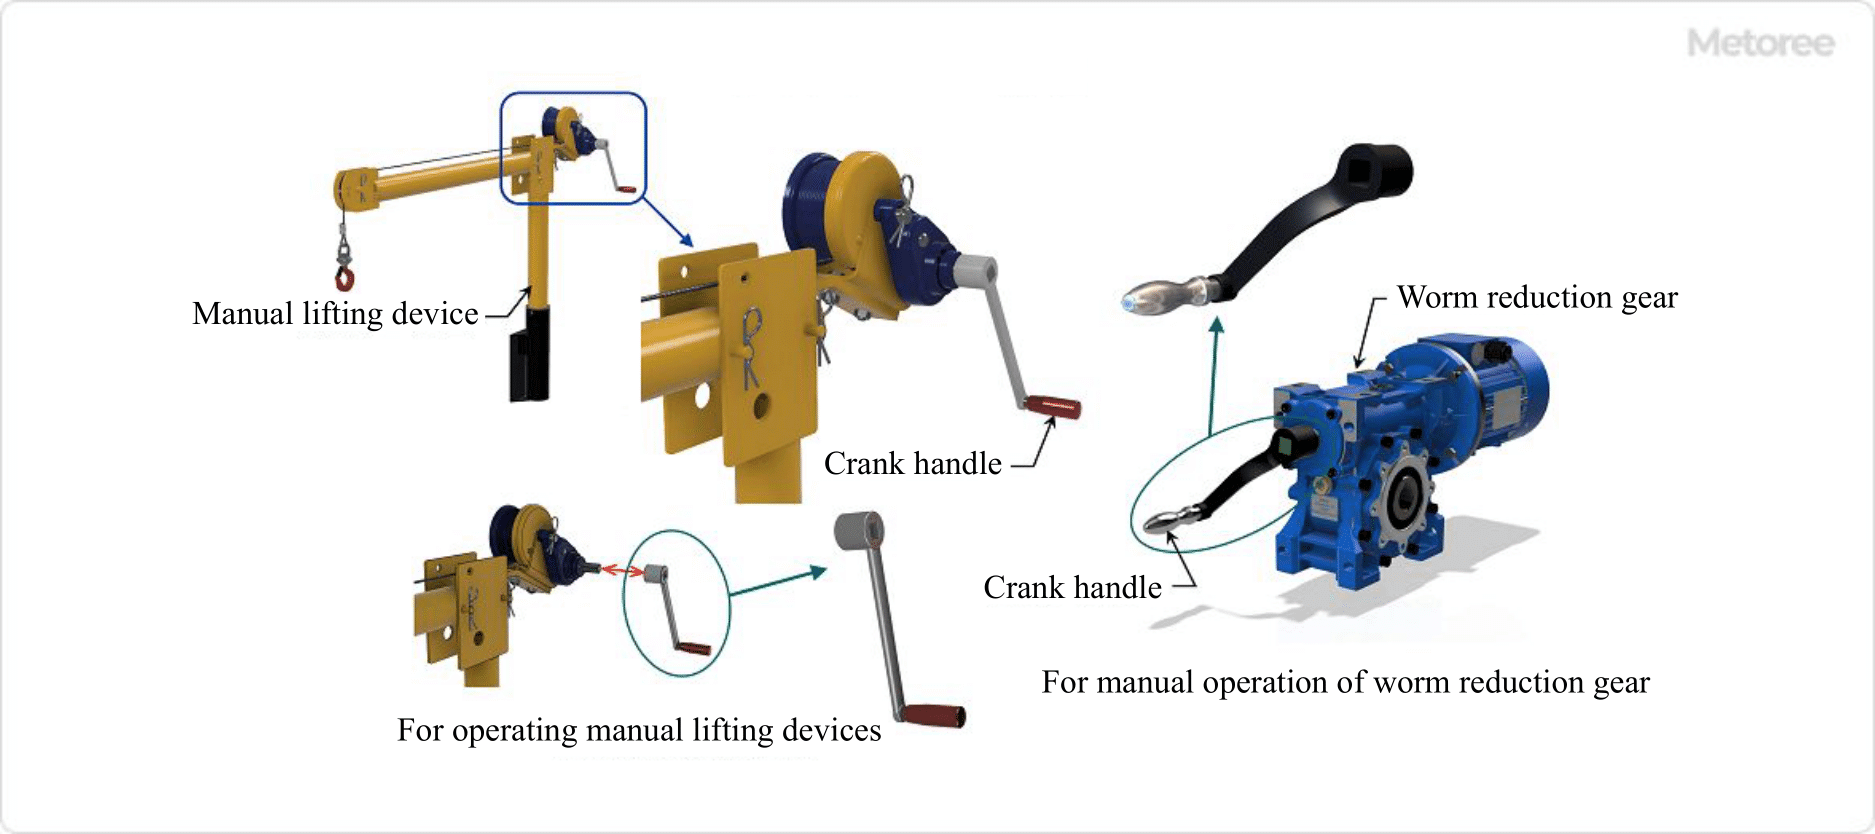 Figure 1. Example of crank handle use